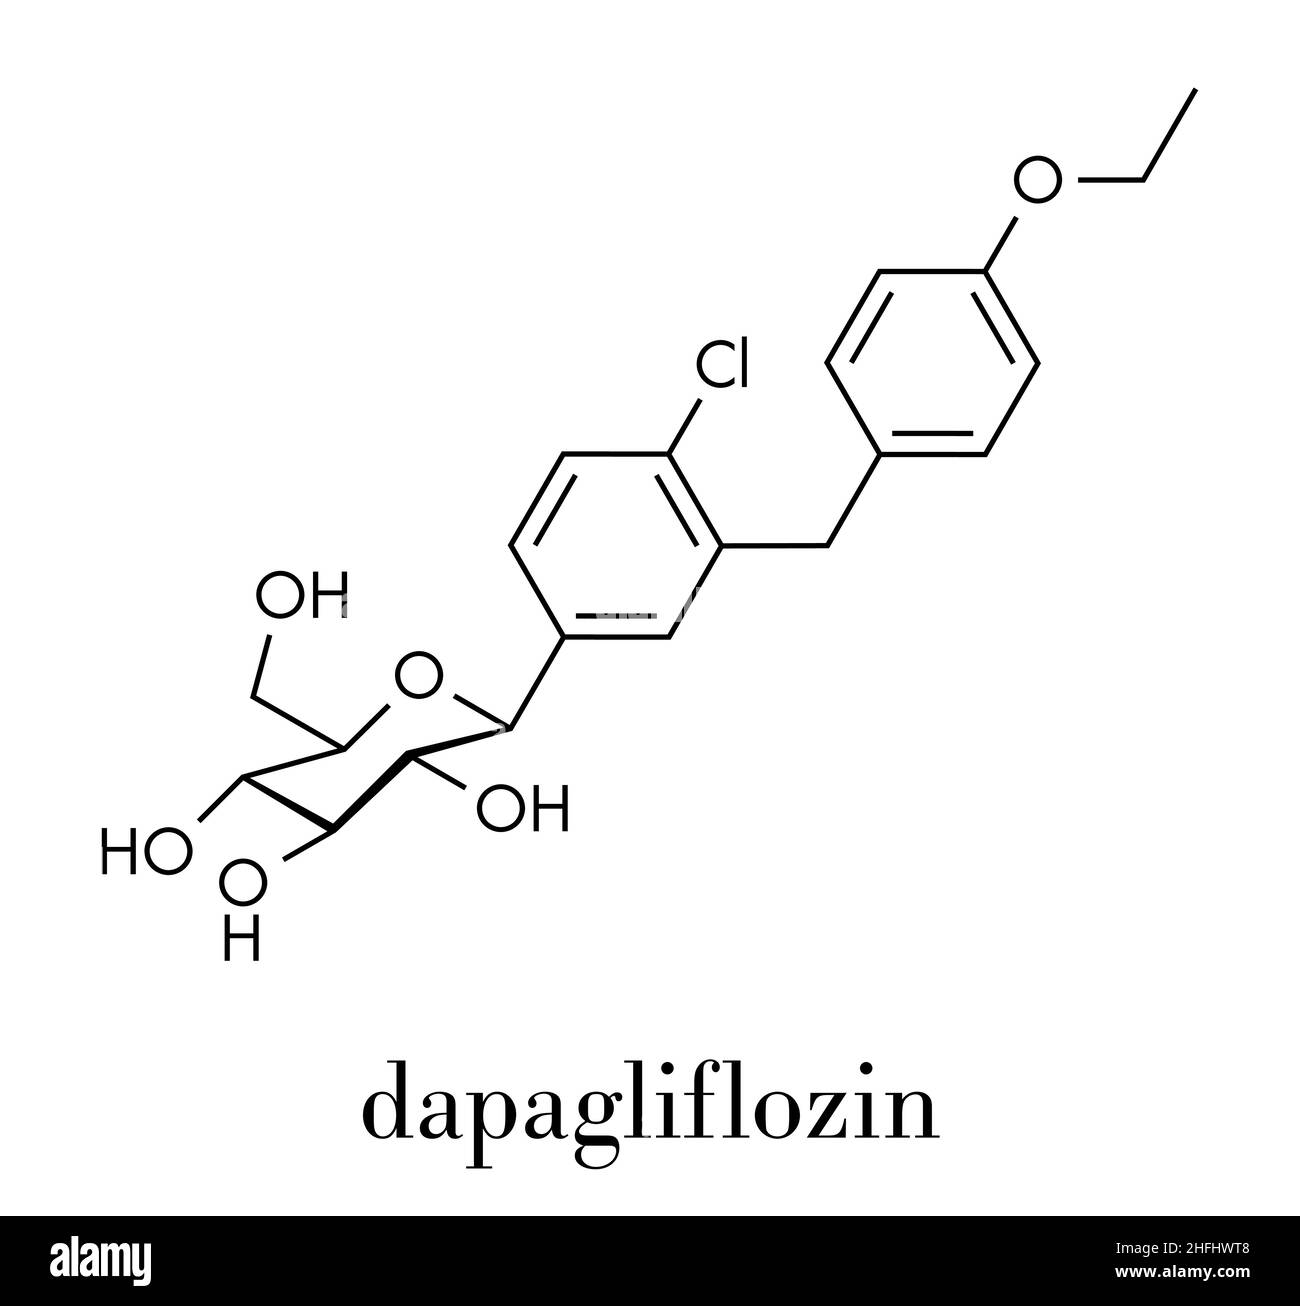 Dapagliflozin diabetes drug molecule. Inhibitor of sodium-glucose transport proteins subtype 2 (SGLT2). Skeletal formula. Stock Vector